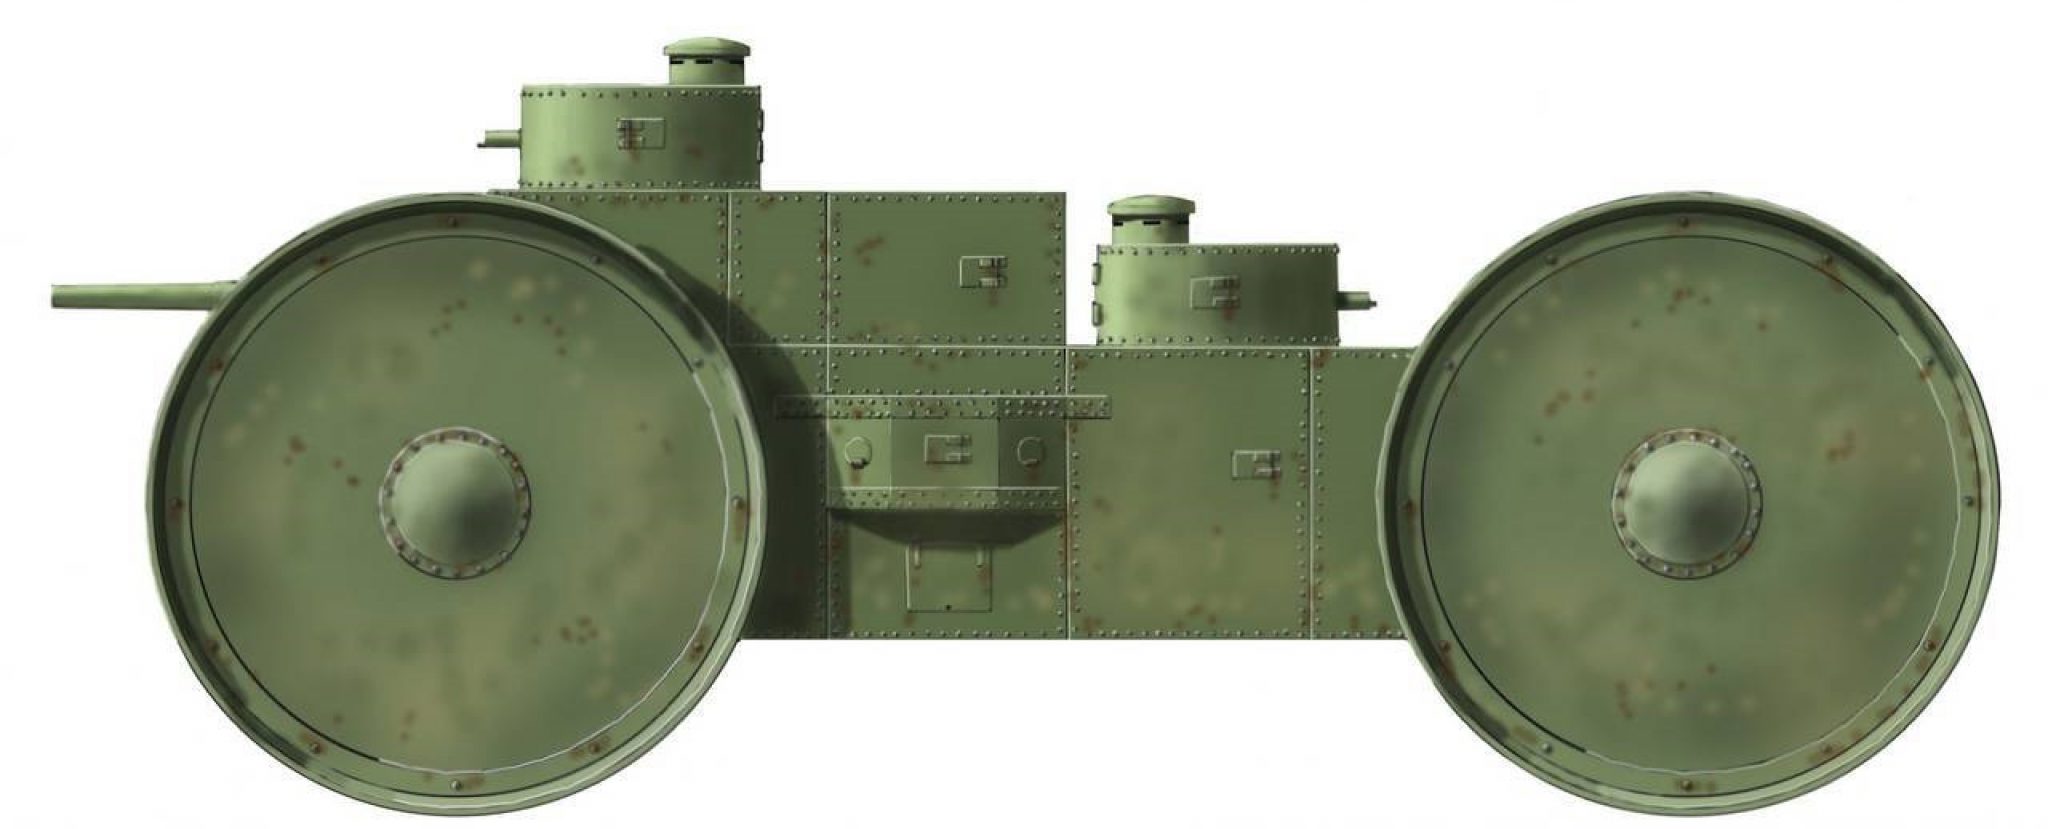 Holt steam wheel tank фото 1